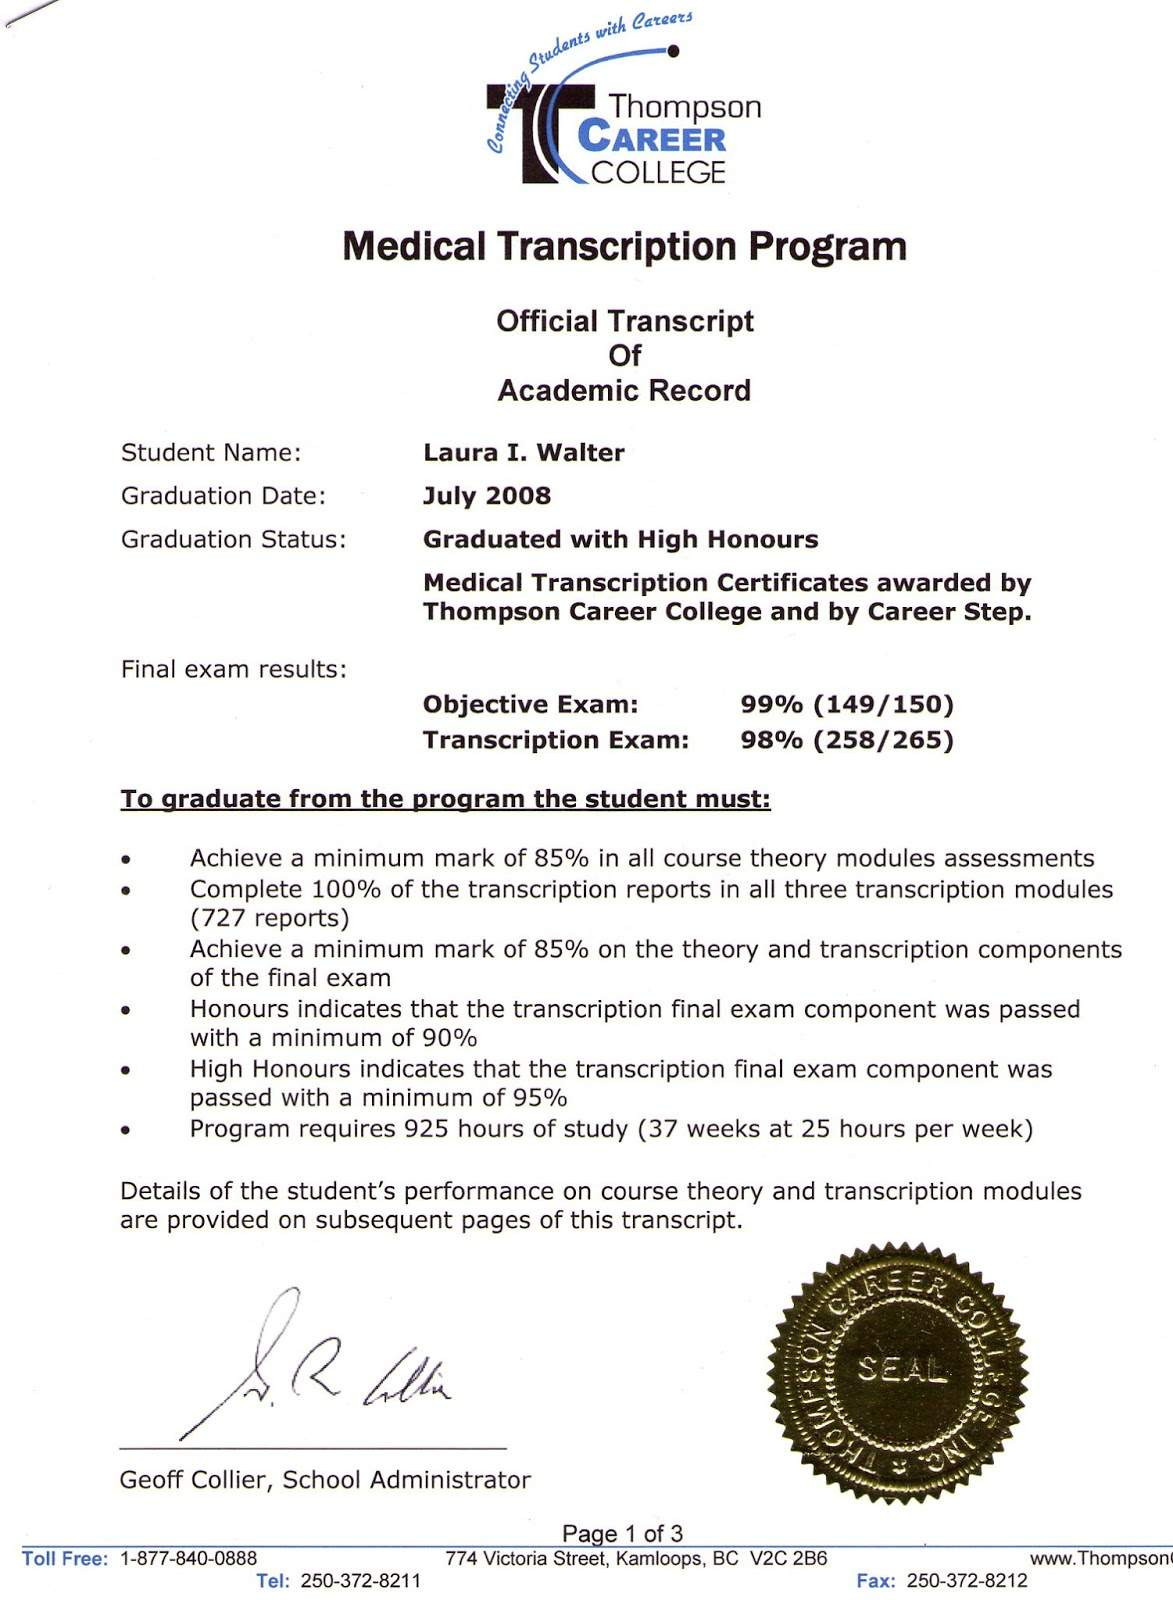 resume format for medical transcriptionml